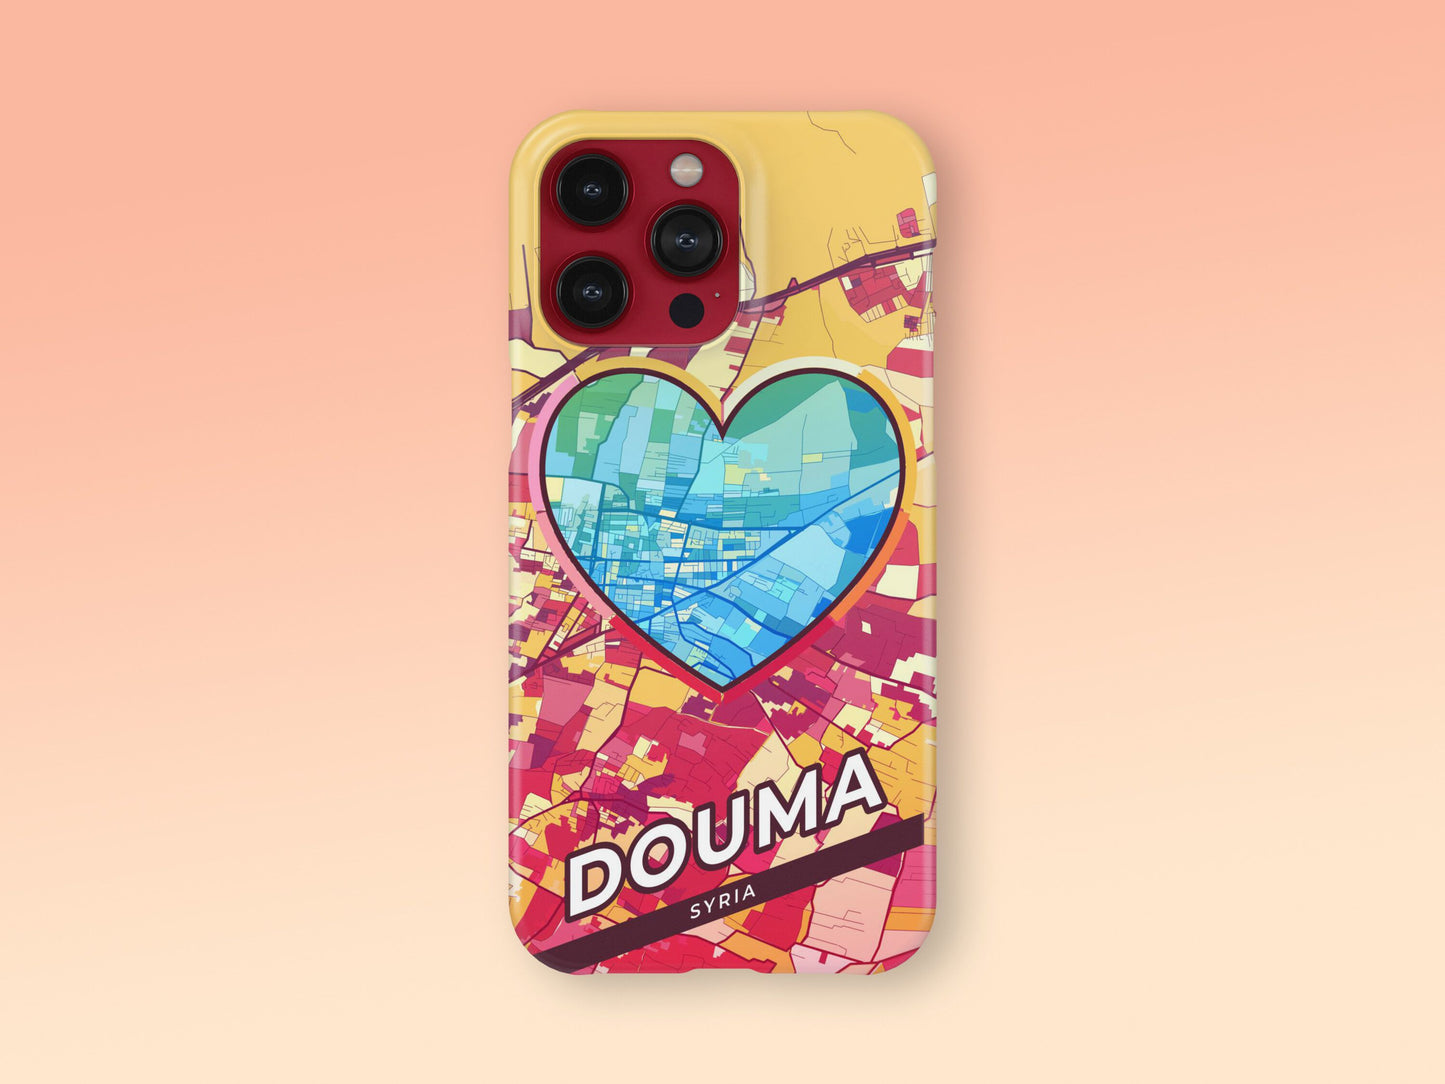 Douma Syria slim phone case with colorful icon. Birthday, wedding or housewarming gift. Couple match cases. 2